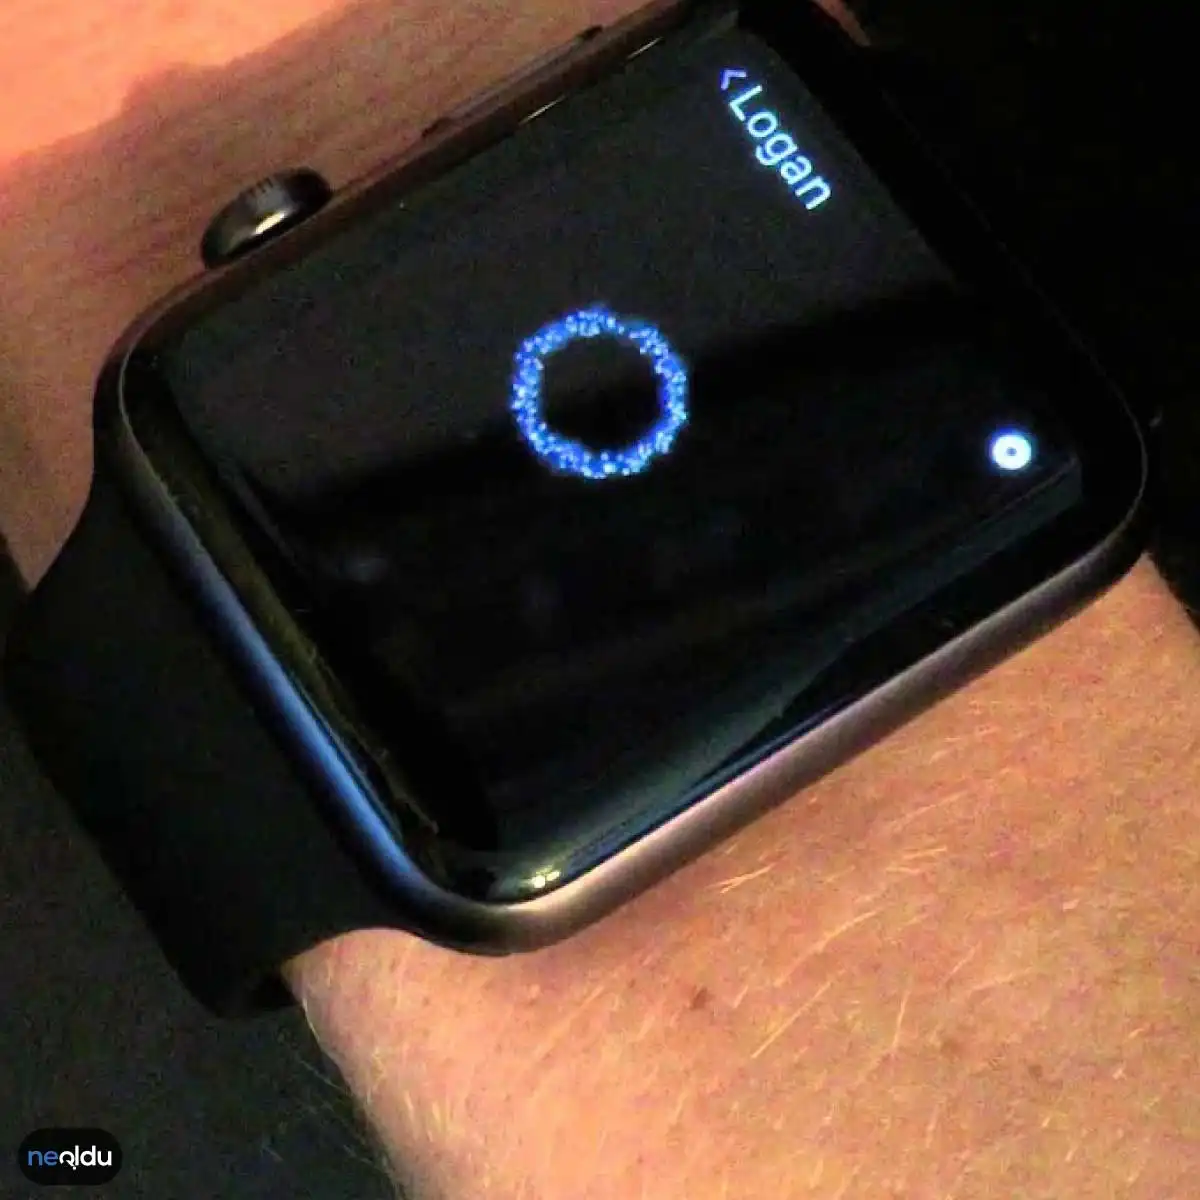 Apple Watch Digital Touch